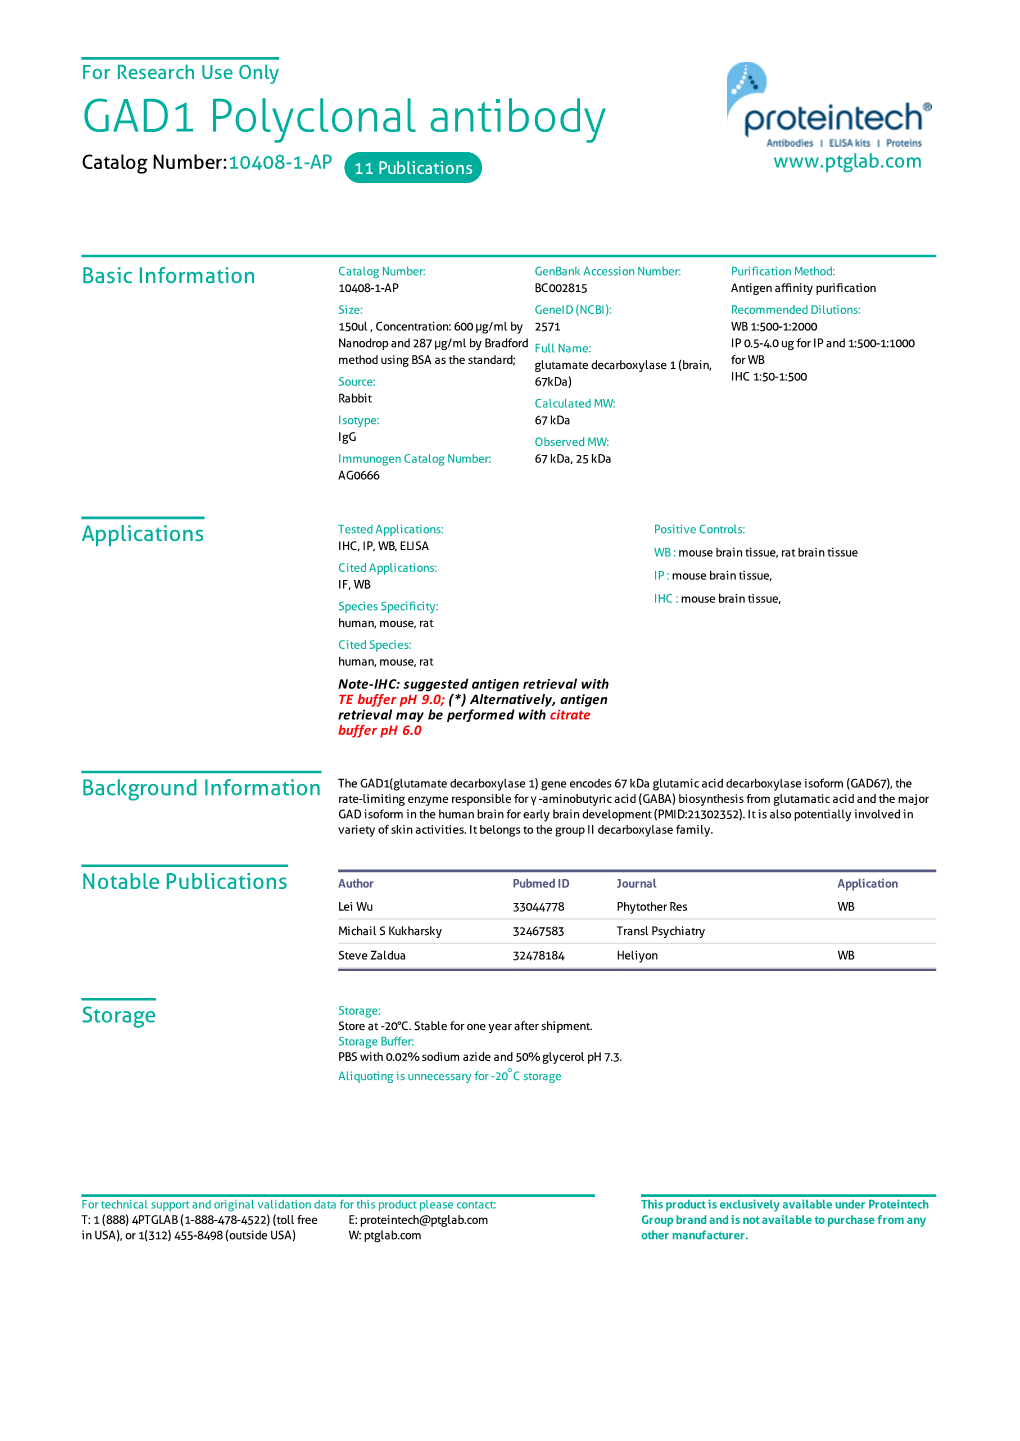 GAD1 Polyclonal Antibody Catalog Number:10408-1-AP 11 Publications